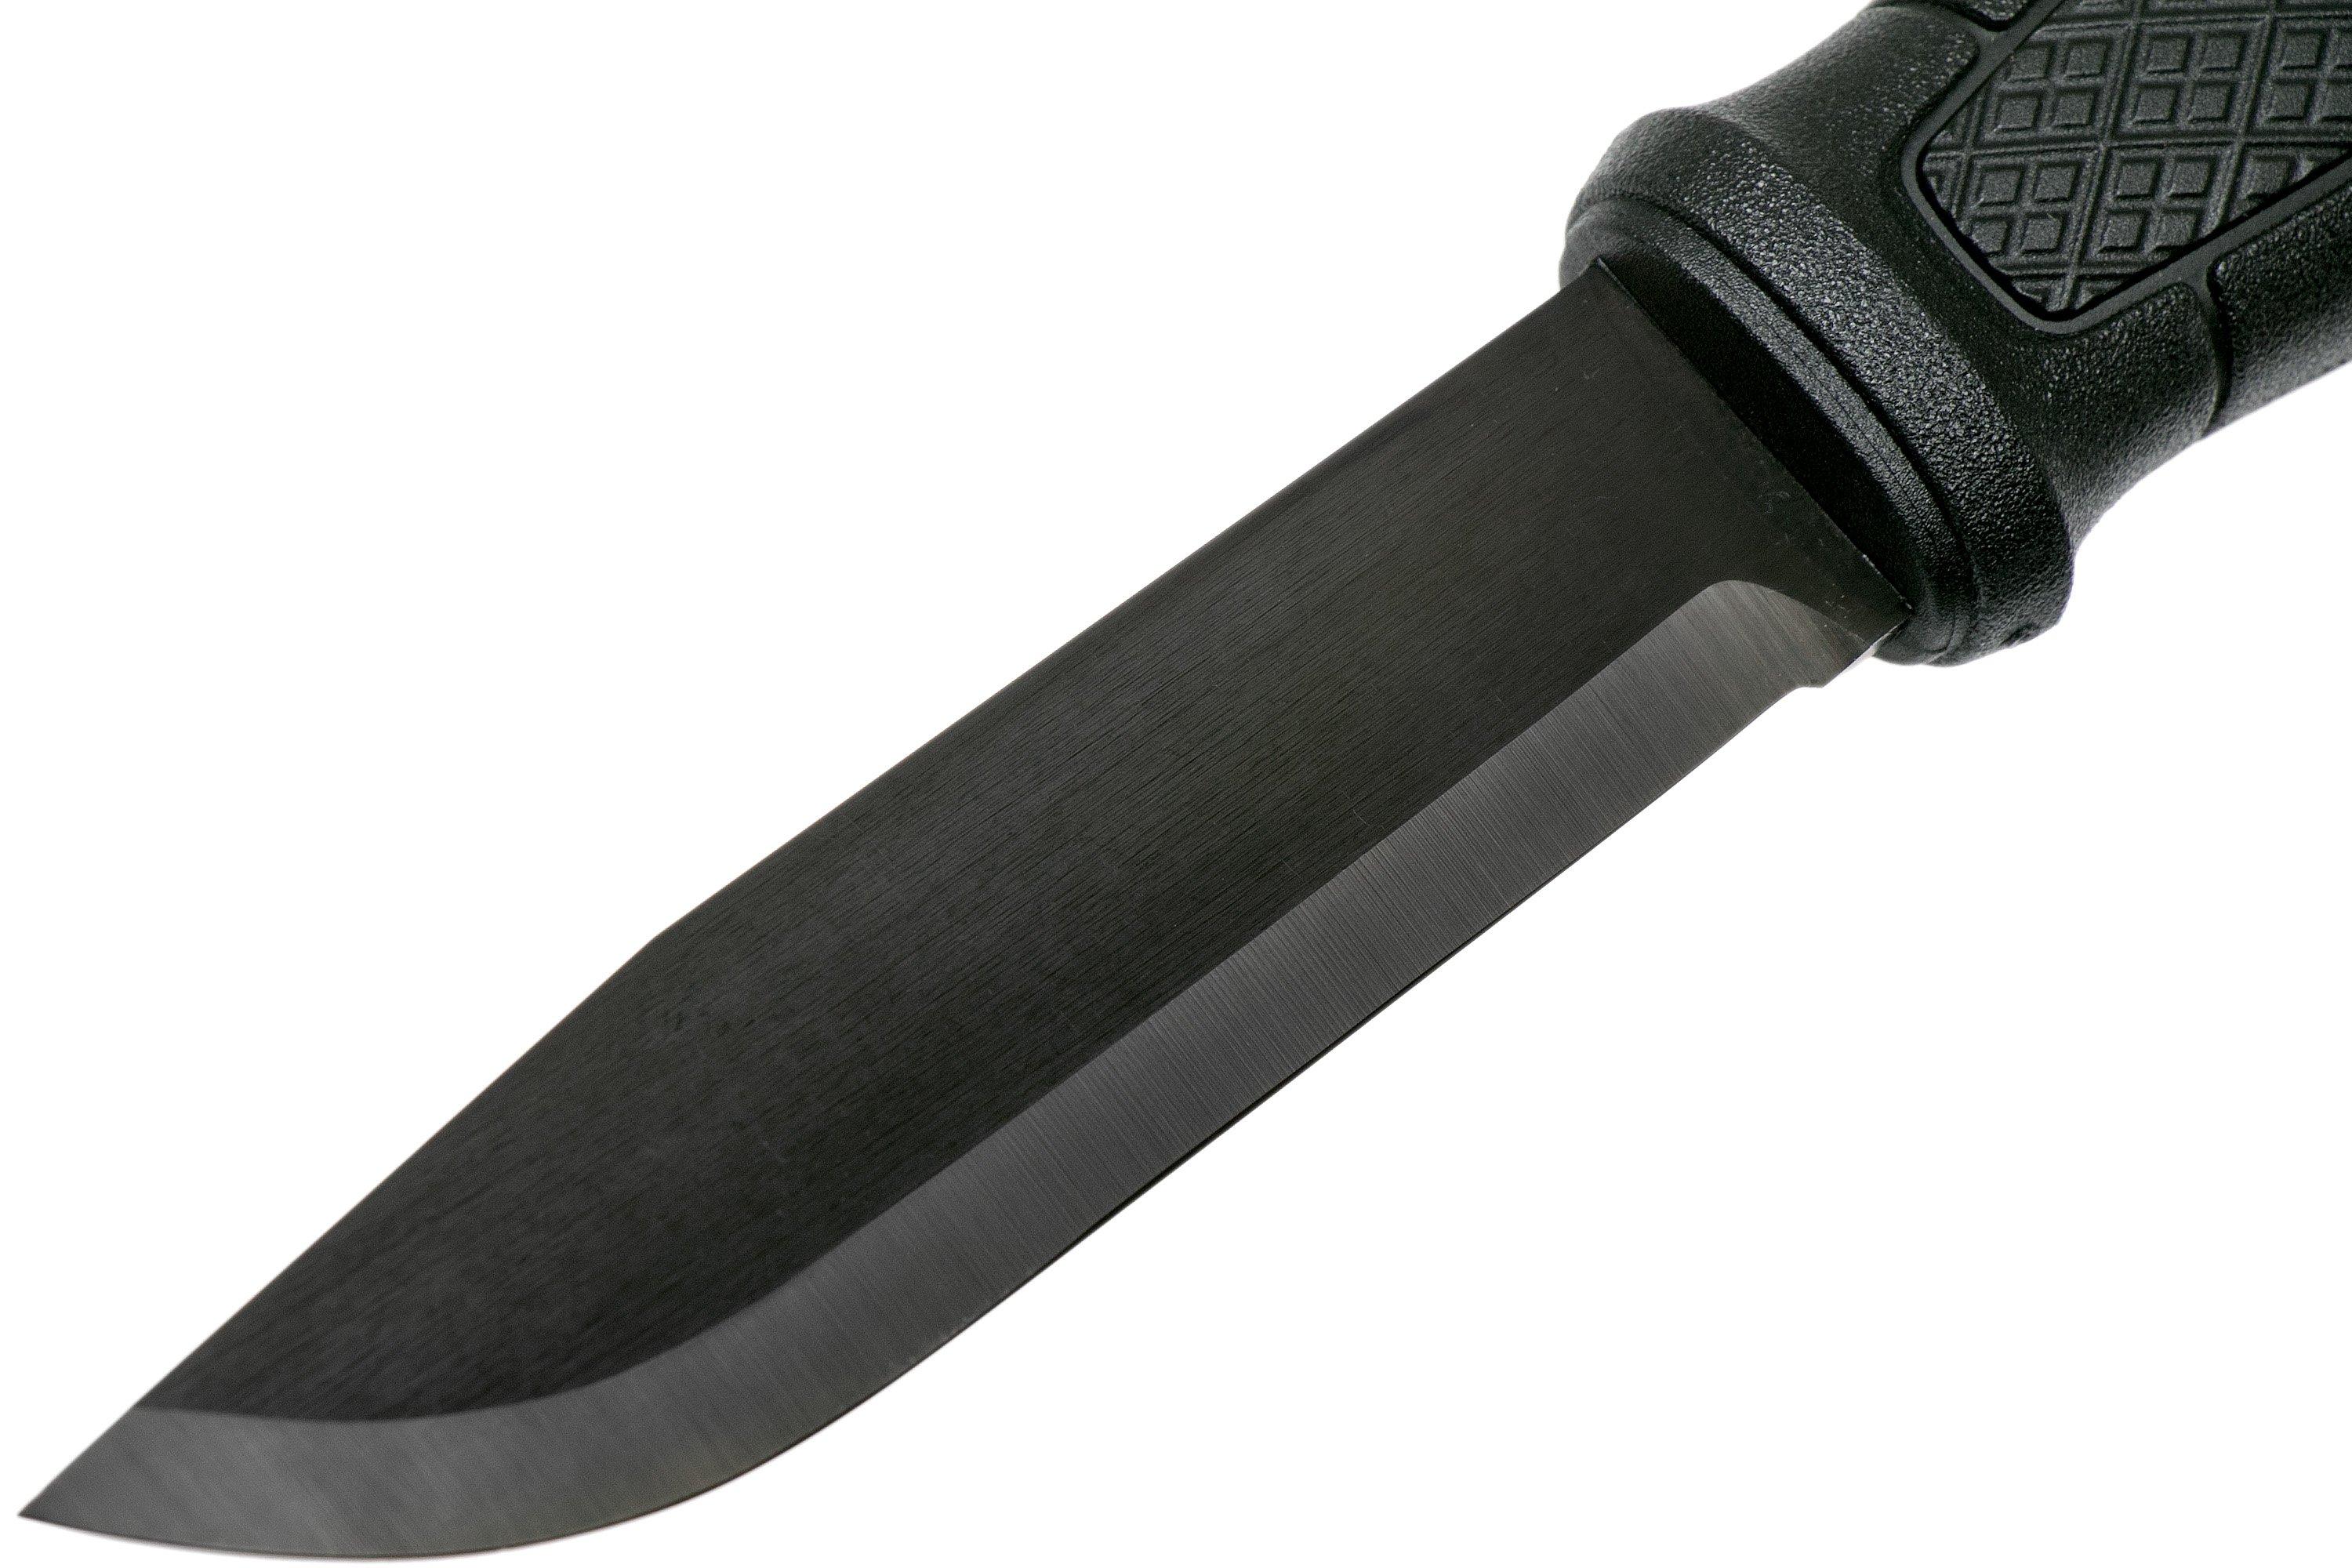 New: Mora Garberg Black Carbon Knife